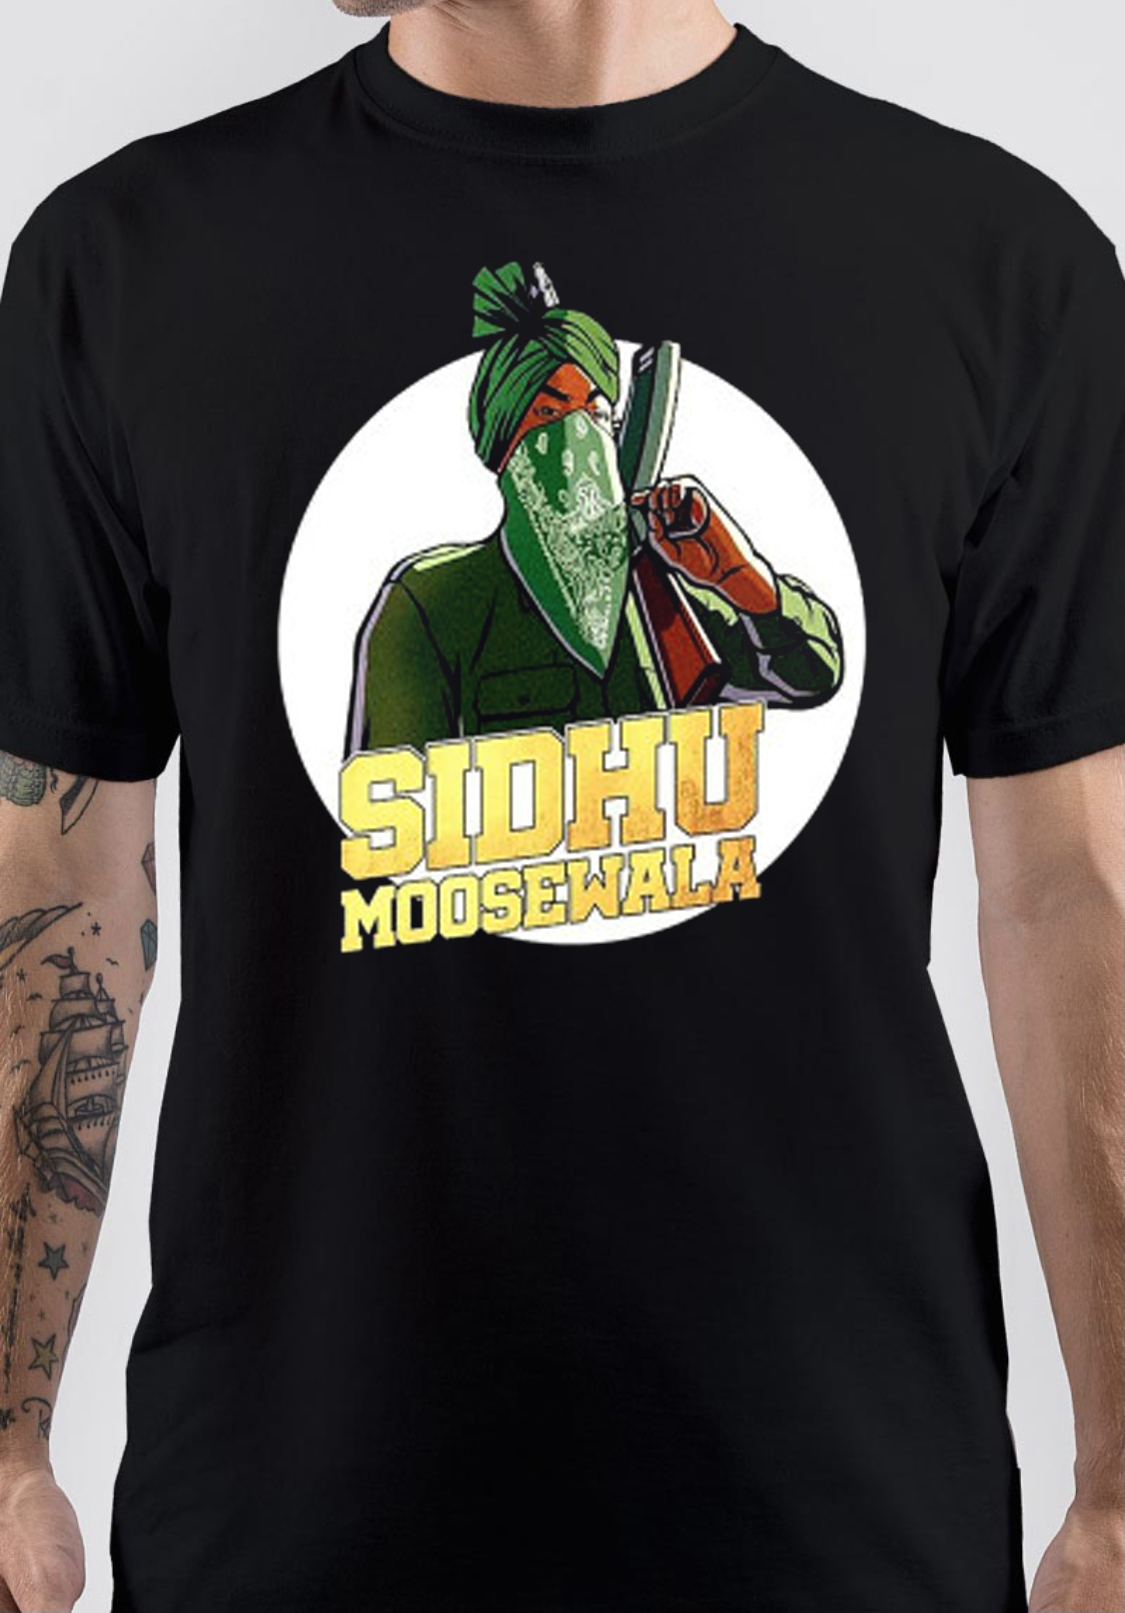 Sidhu Moose Wala Art T-Shirt | Swag Shirts